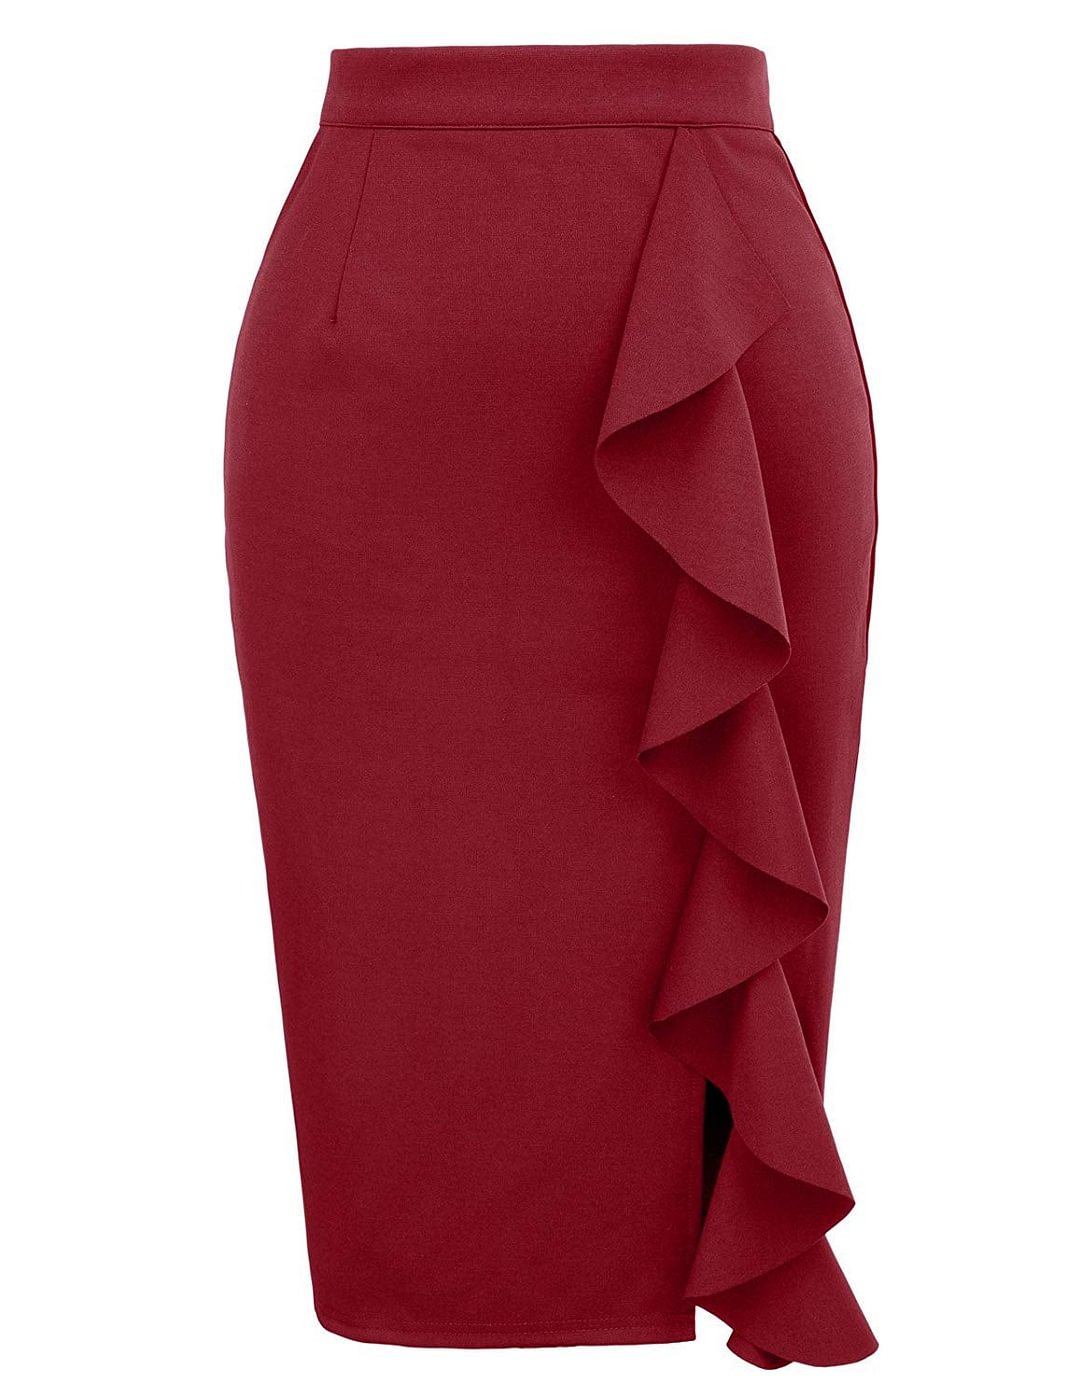 Women's Ruffle Bodycon Knee Length Midi Pencil Skirt